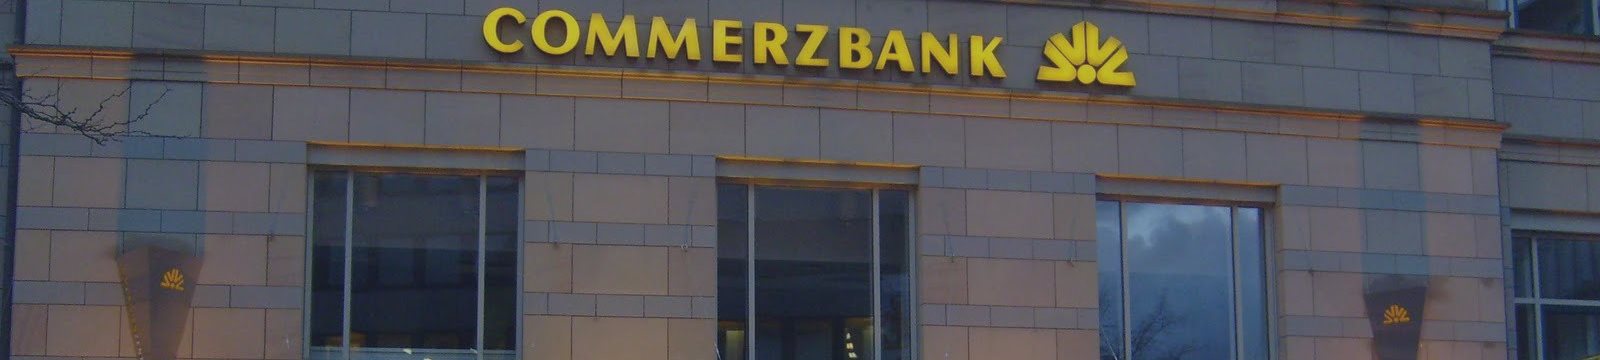 Власти США начали охоту на европейские банки: Сommerzbank в капкане